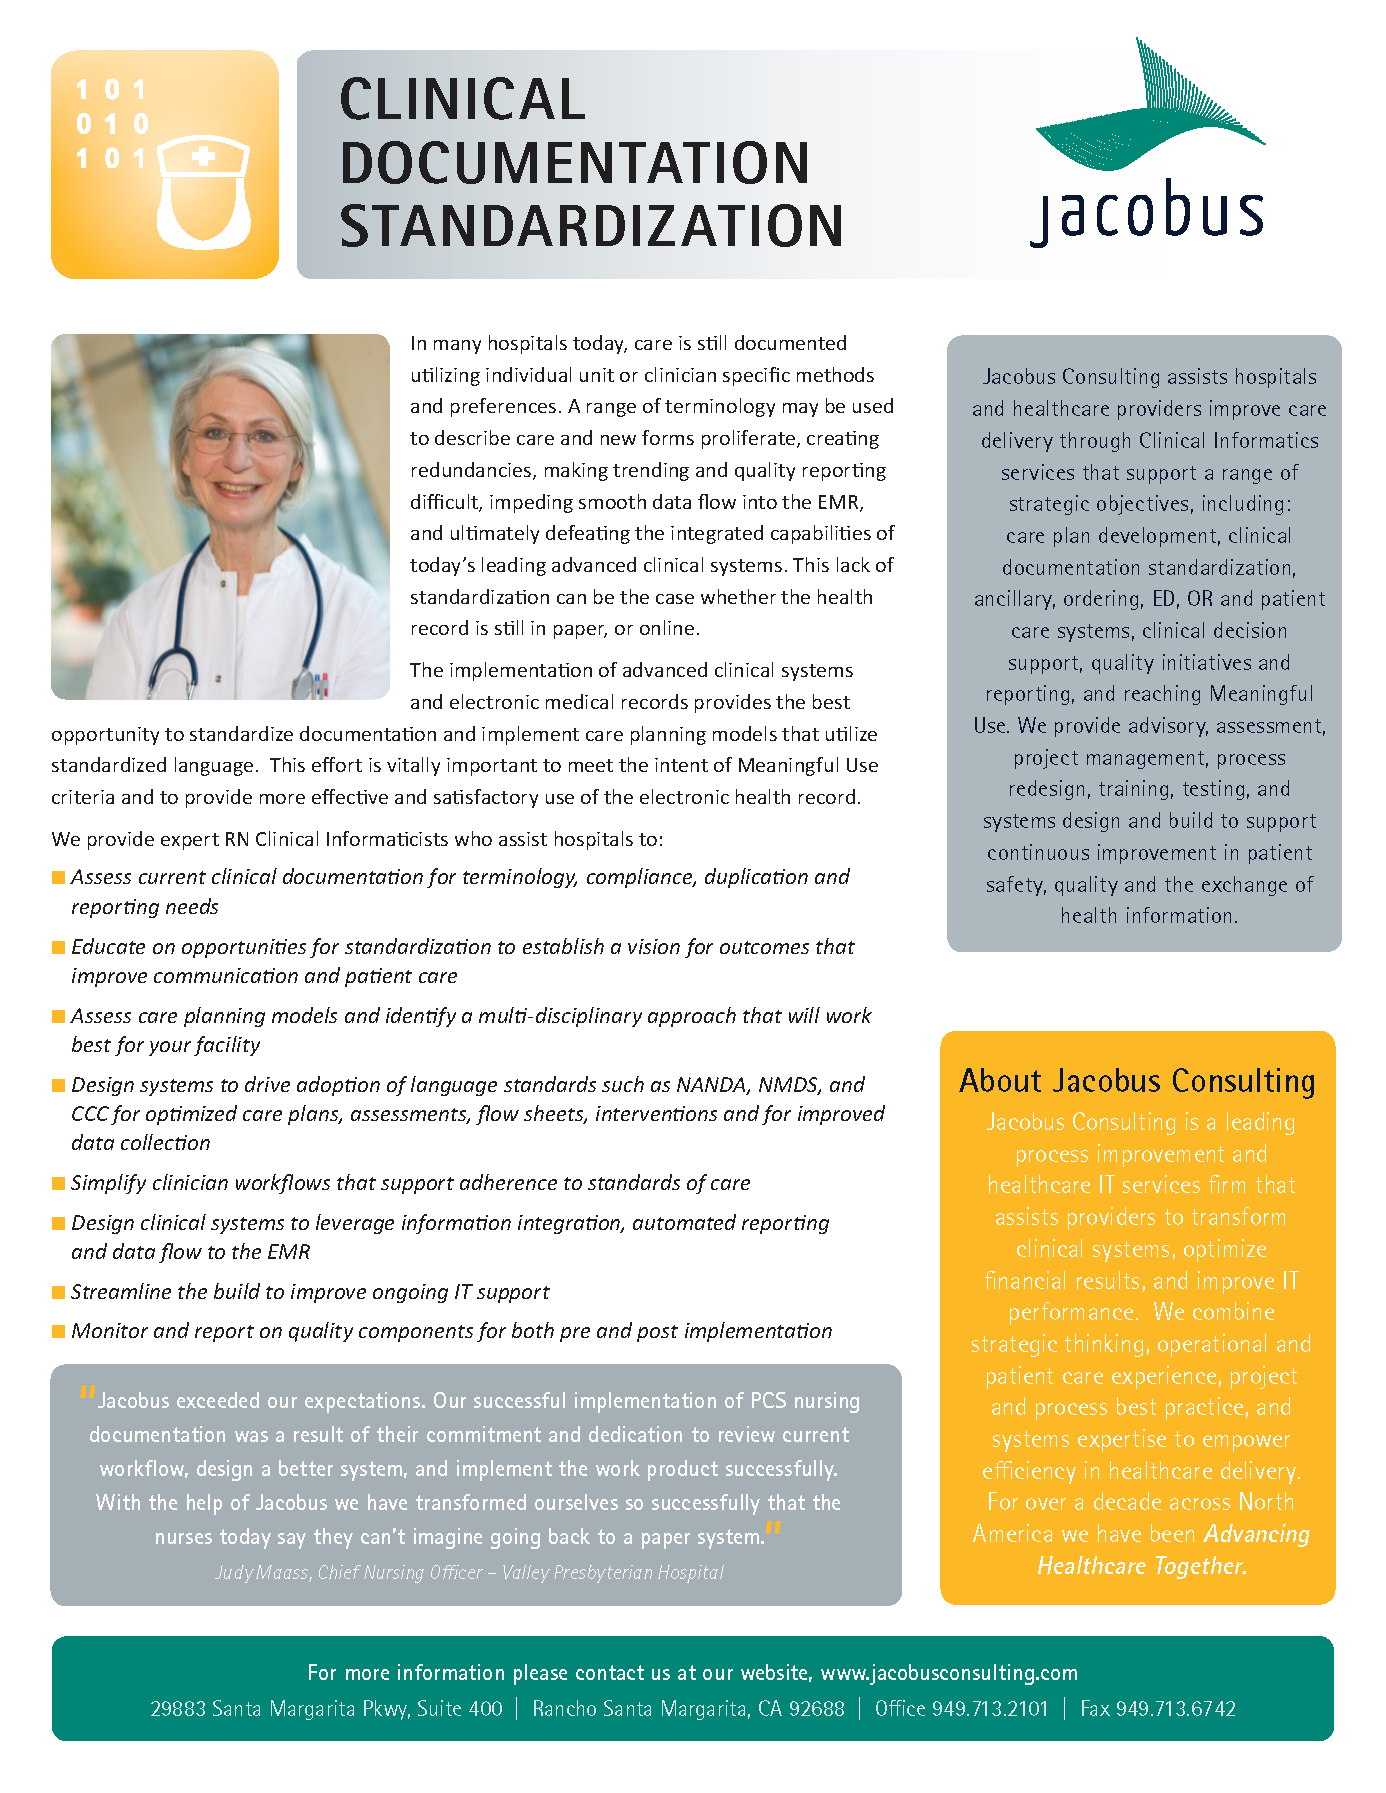 JC_ClinicalDocumentation_PRINT.png